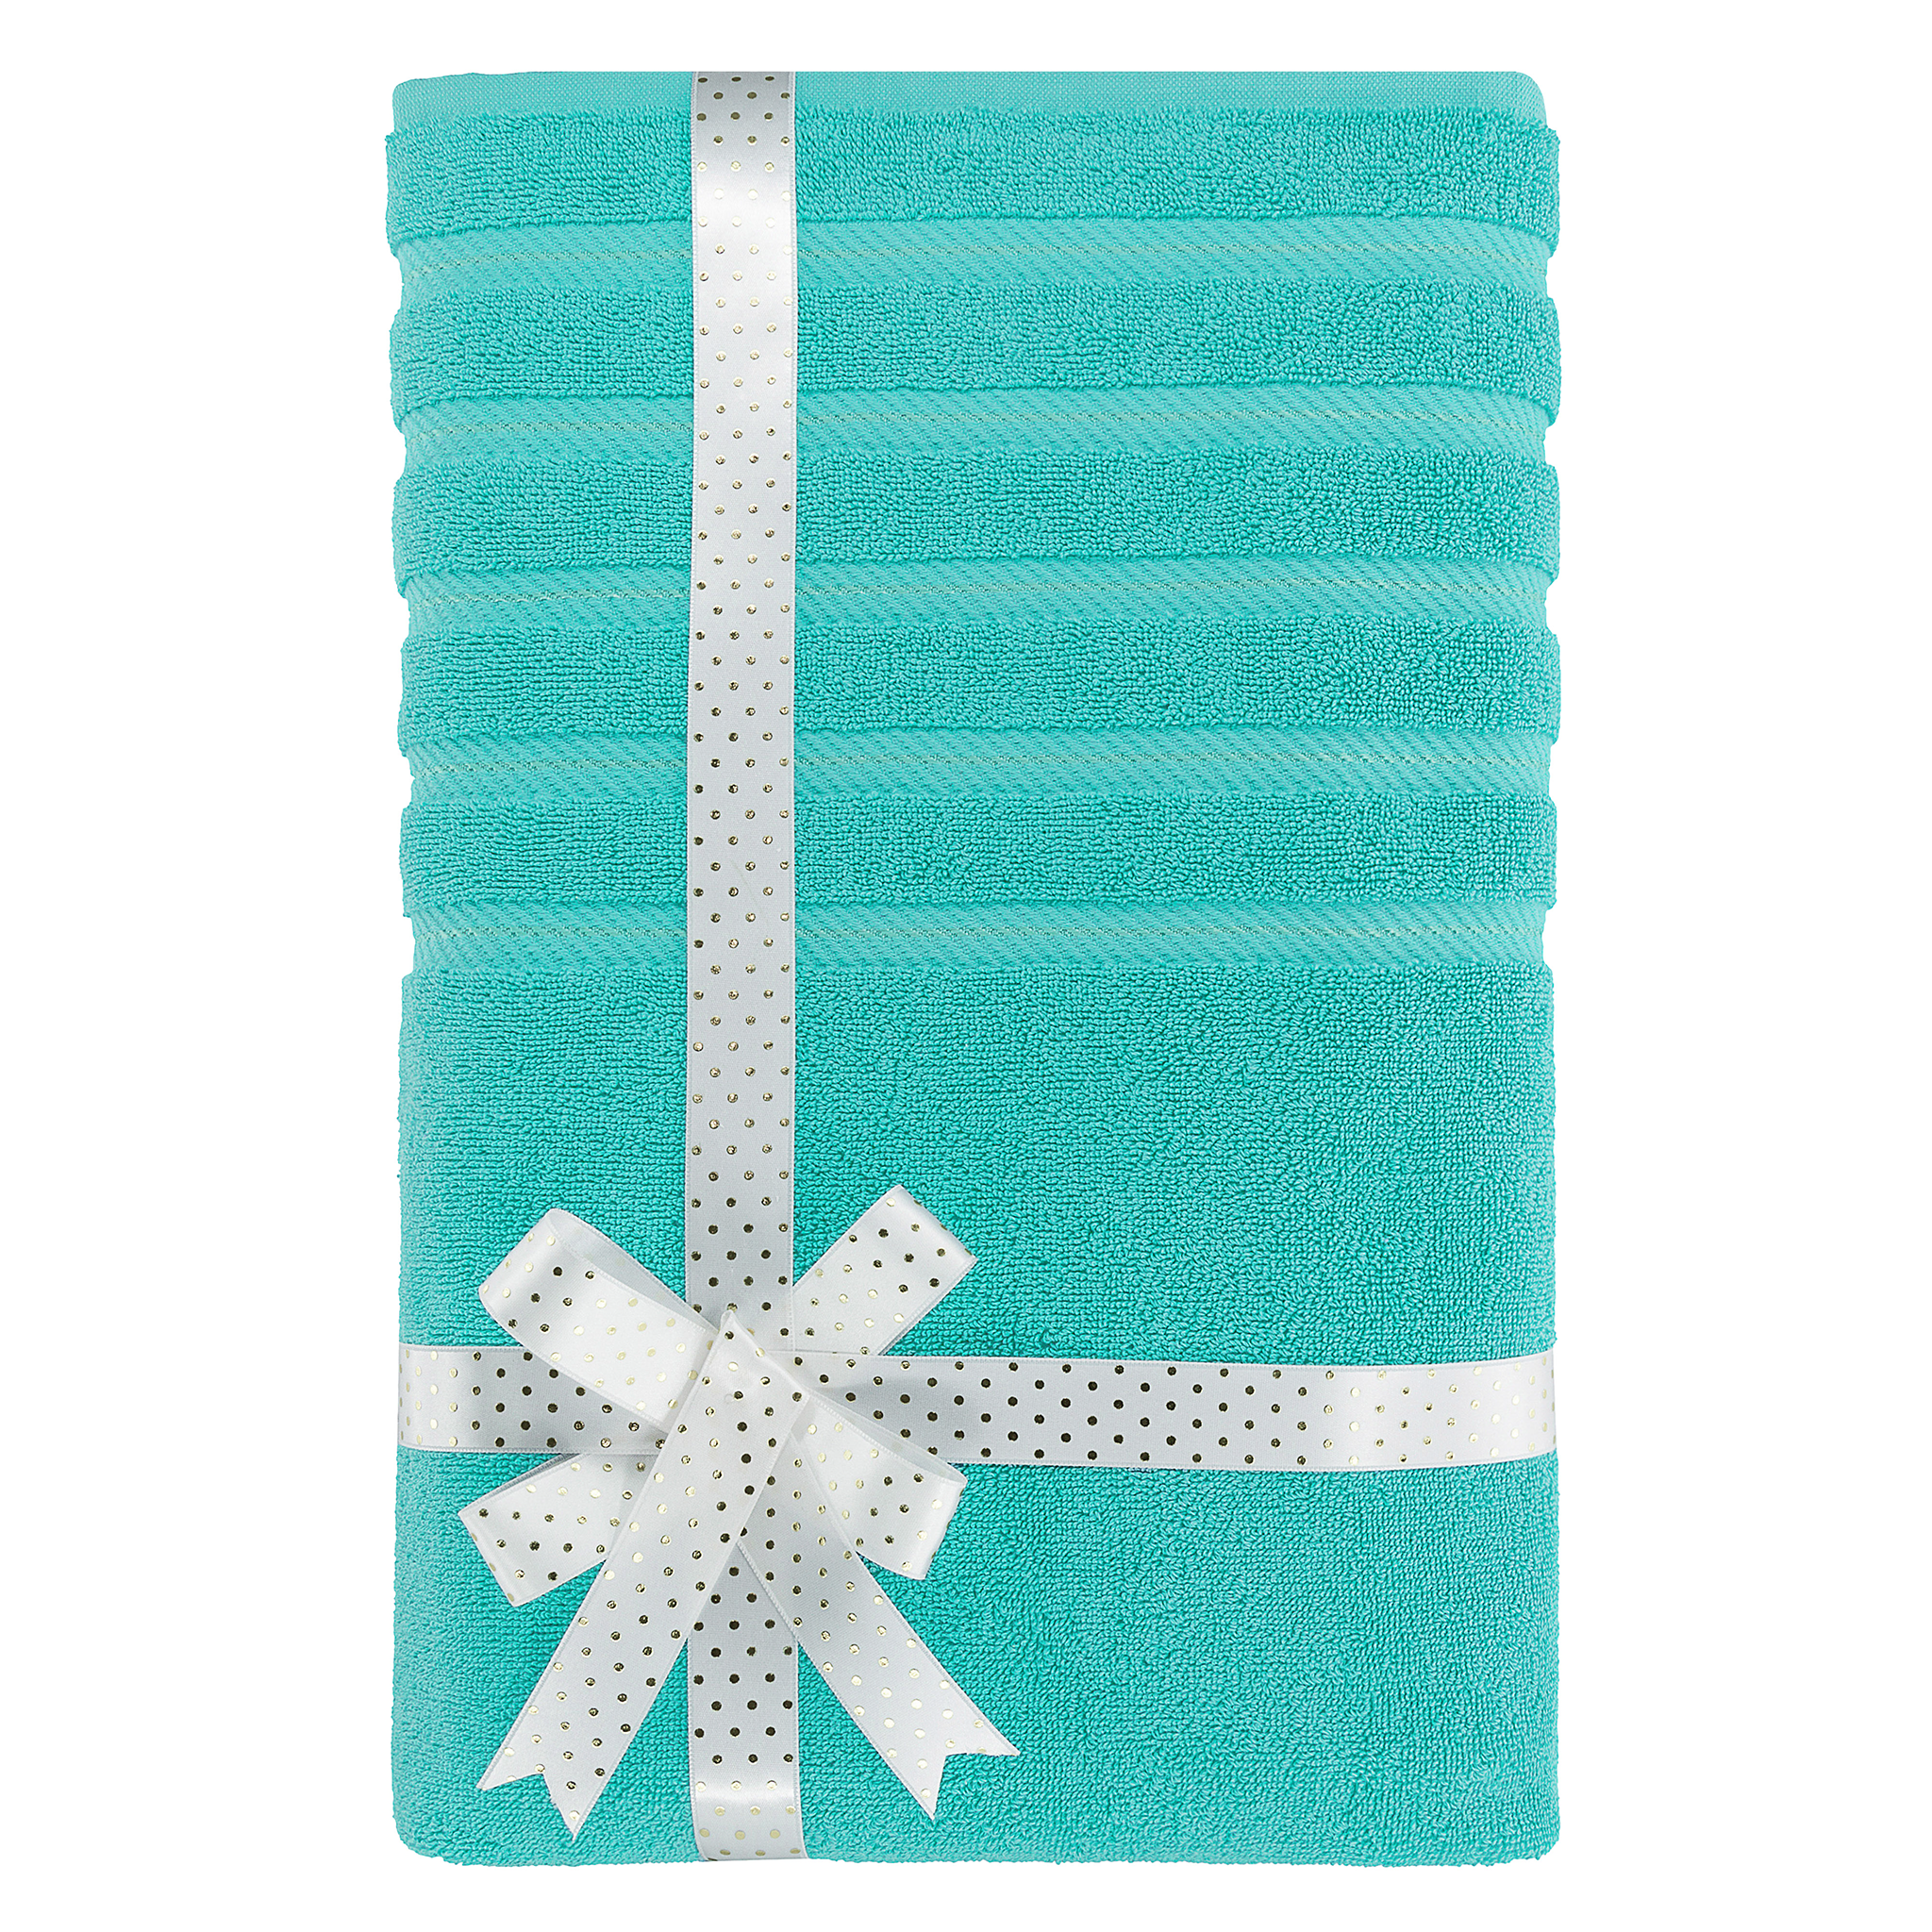 American Soft Linen - 35x70 Jumbo Bath Sheet Turkish Bath Towel - 16 Piece Case Pack - Turquoise-Blue - 3